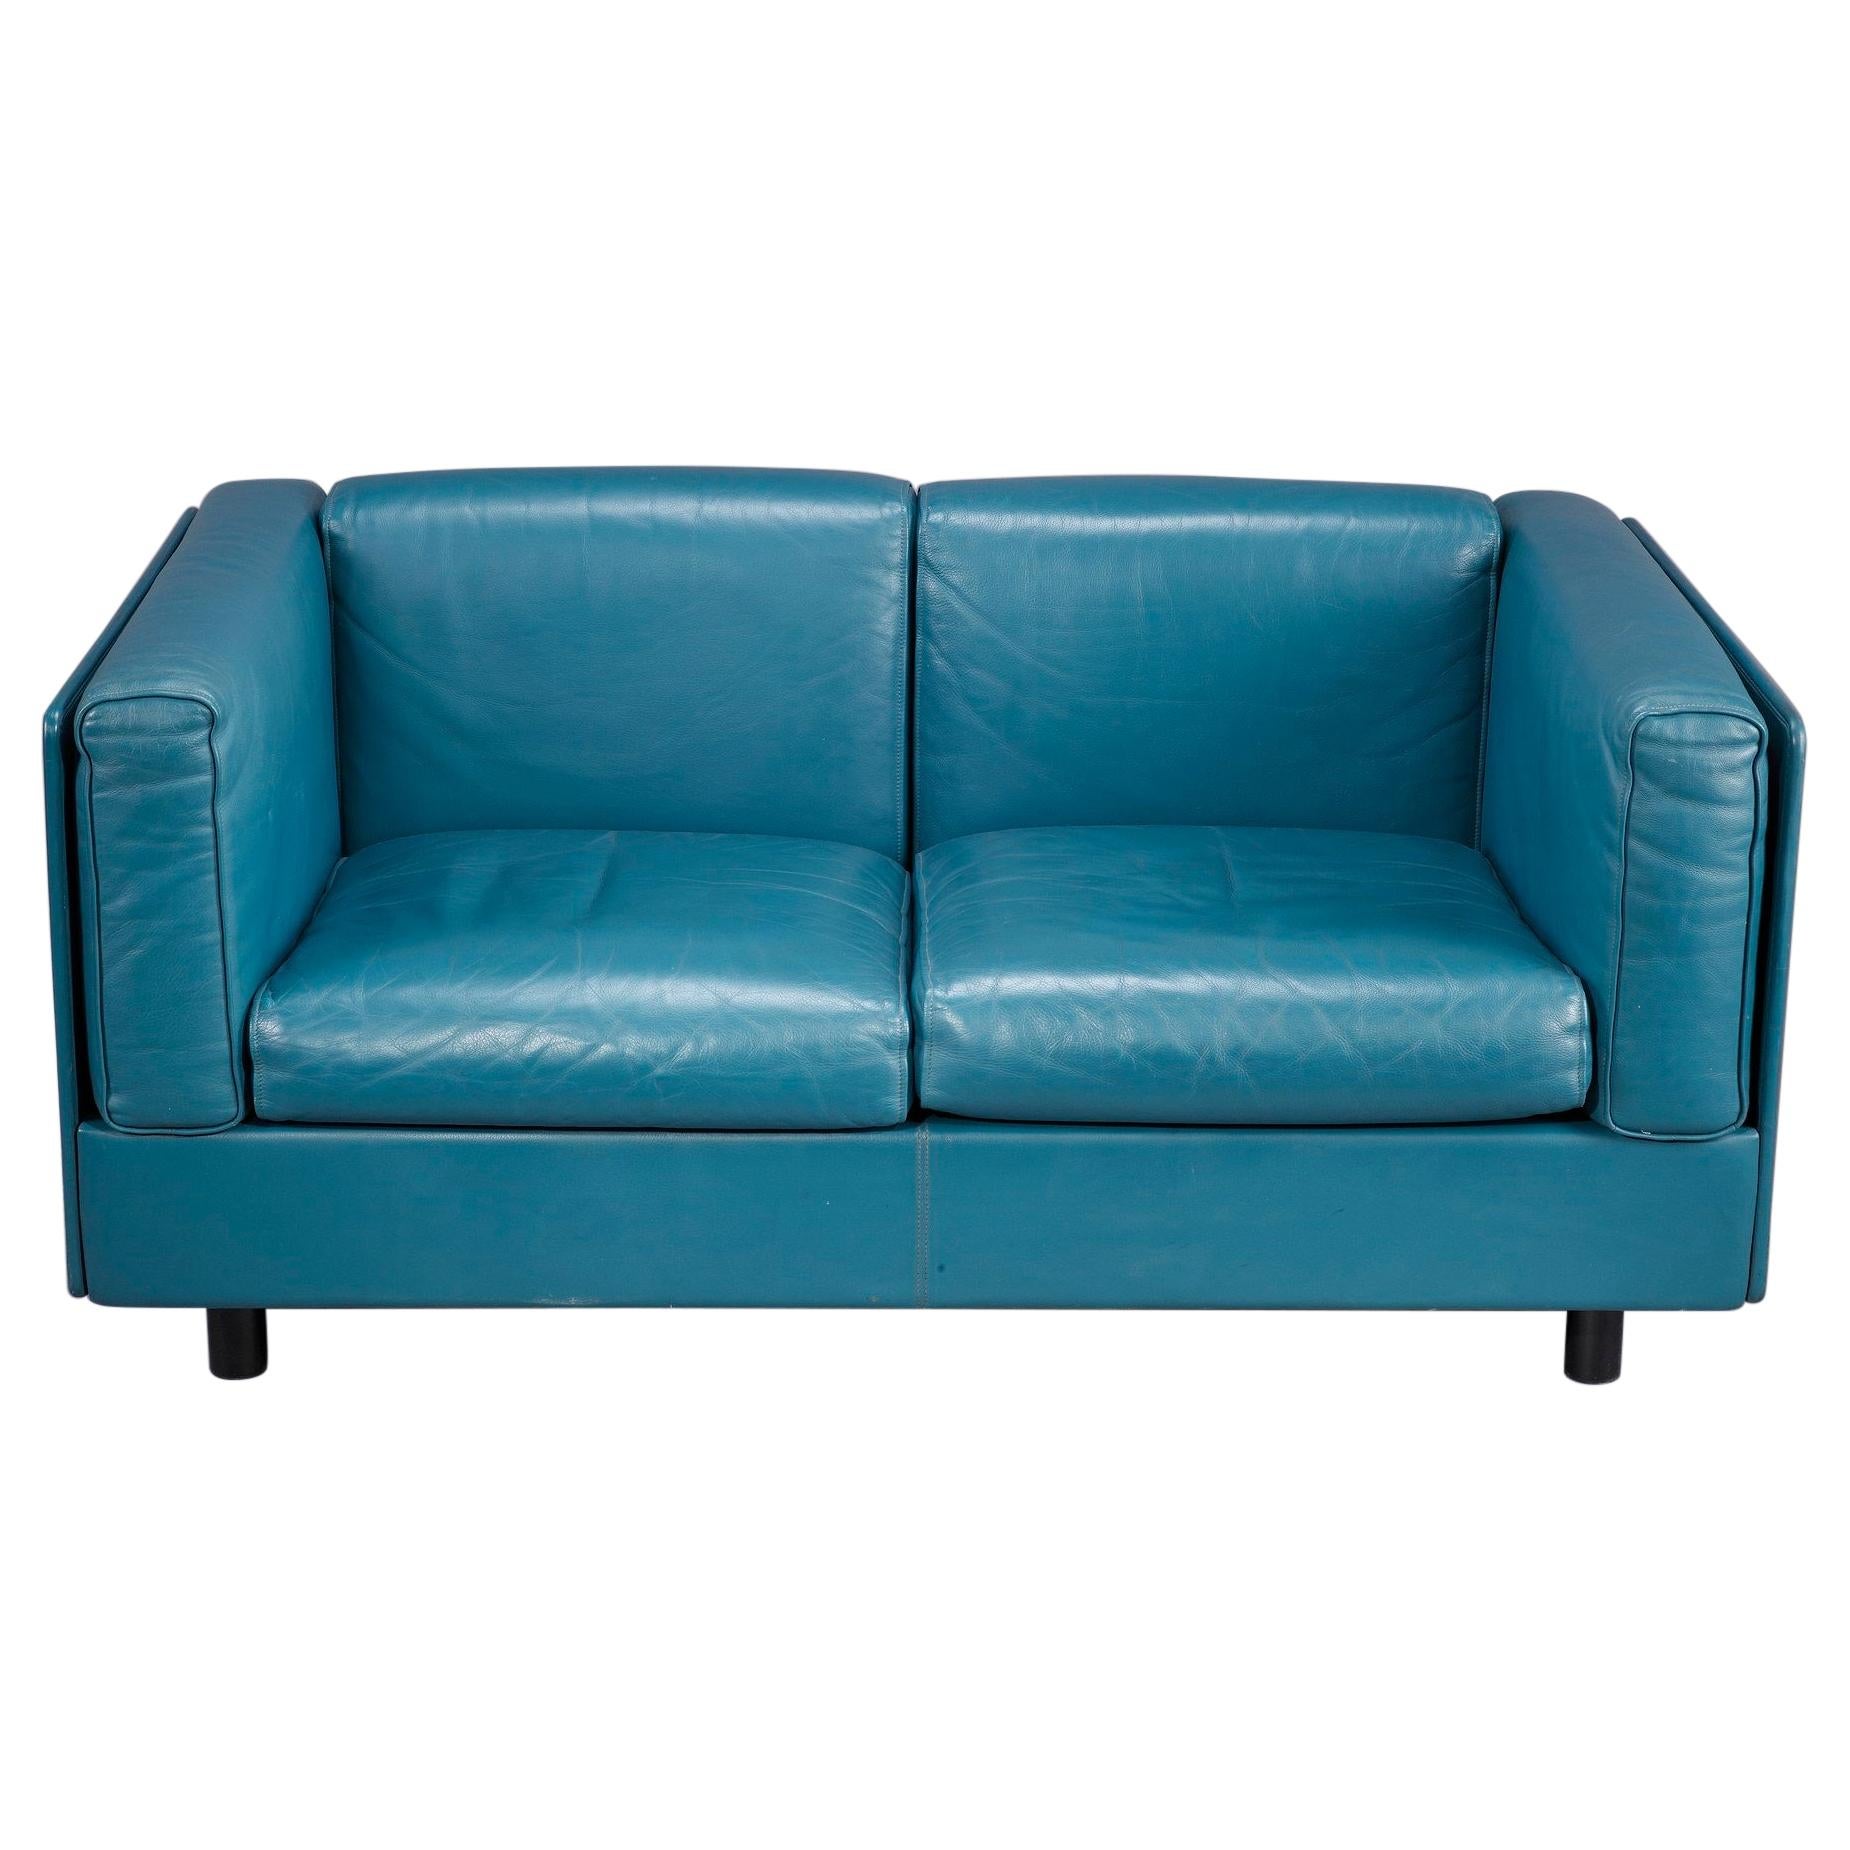 Zanotta 2-Seater Sofa in Blue Leather